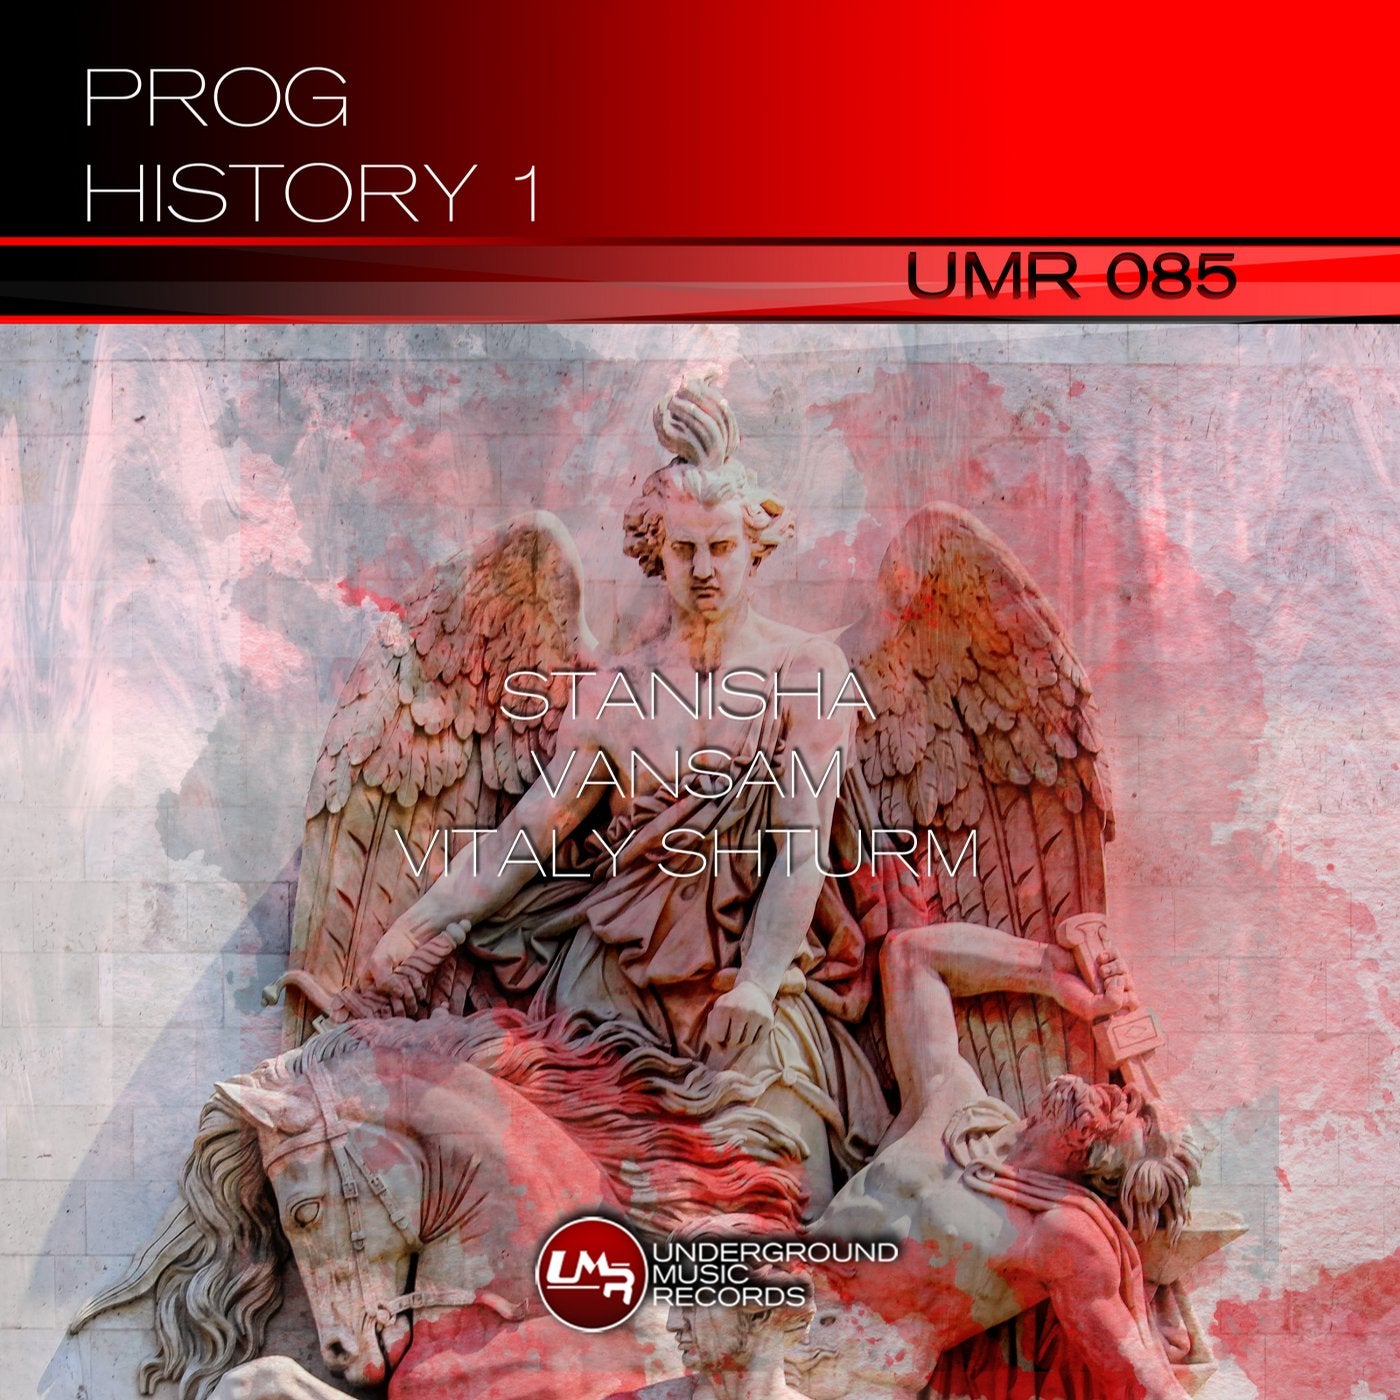 Prog History 1